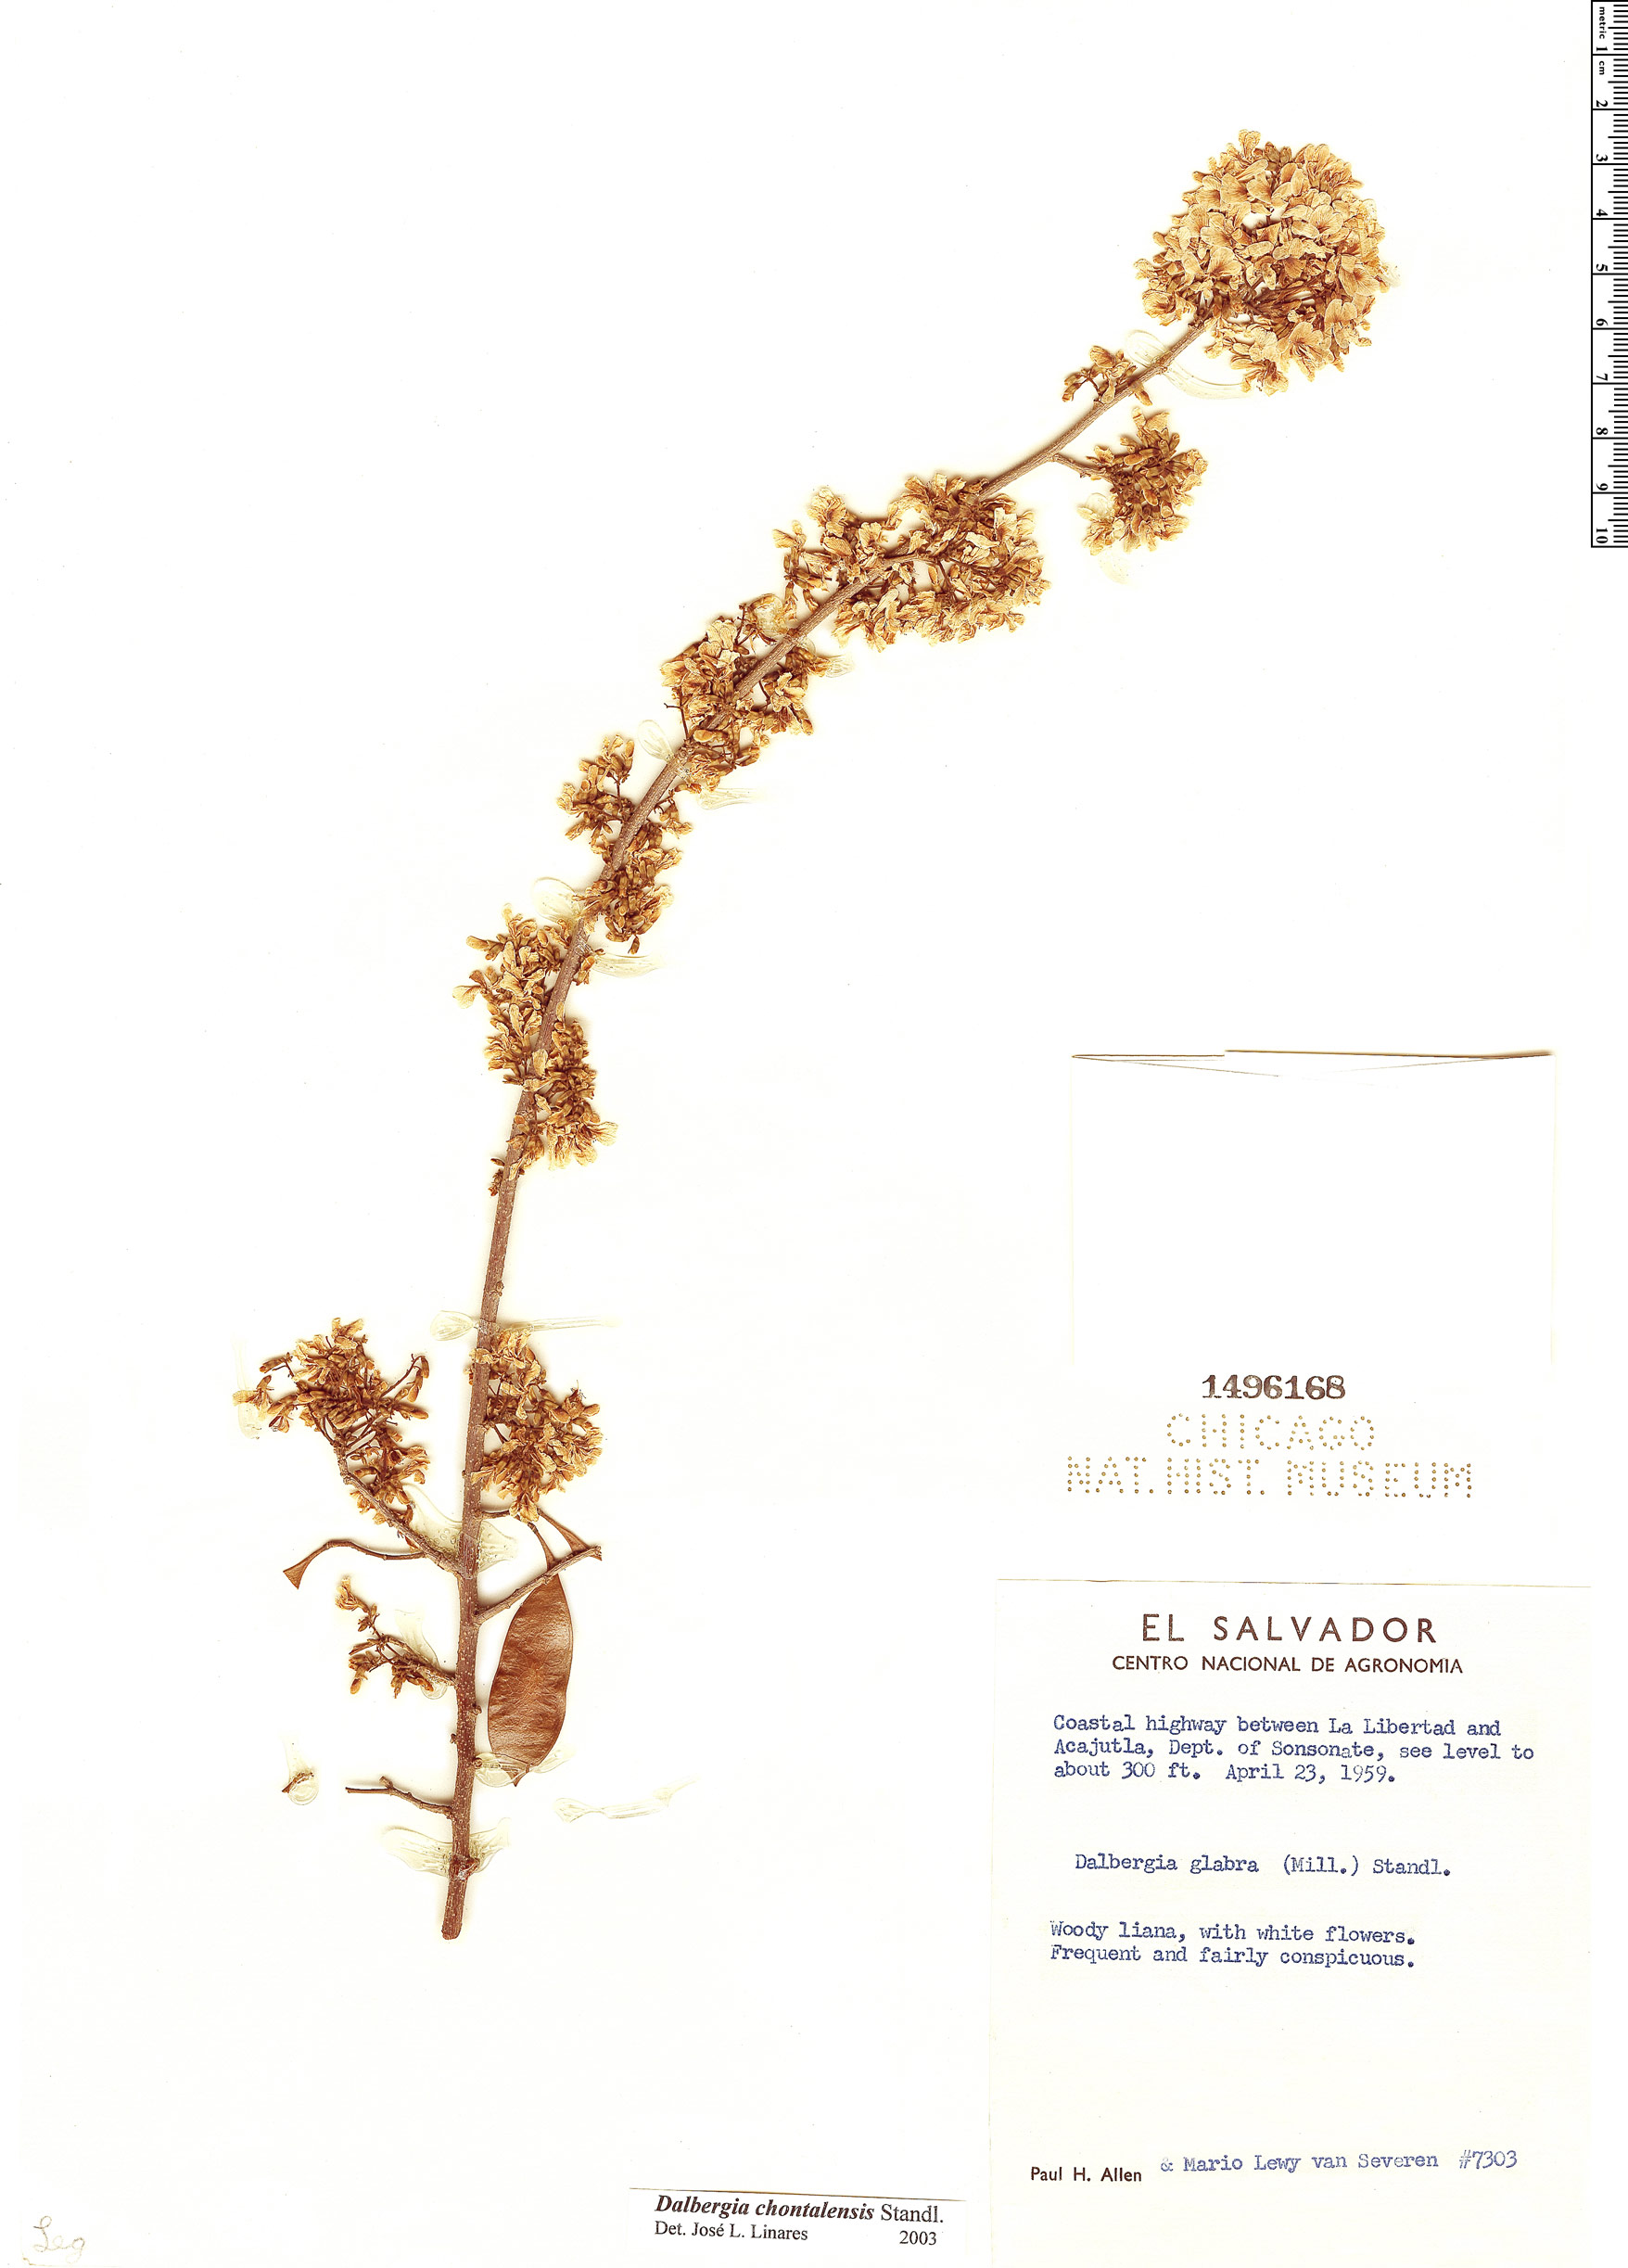 Dalbergia chontalensis image